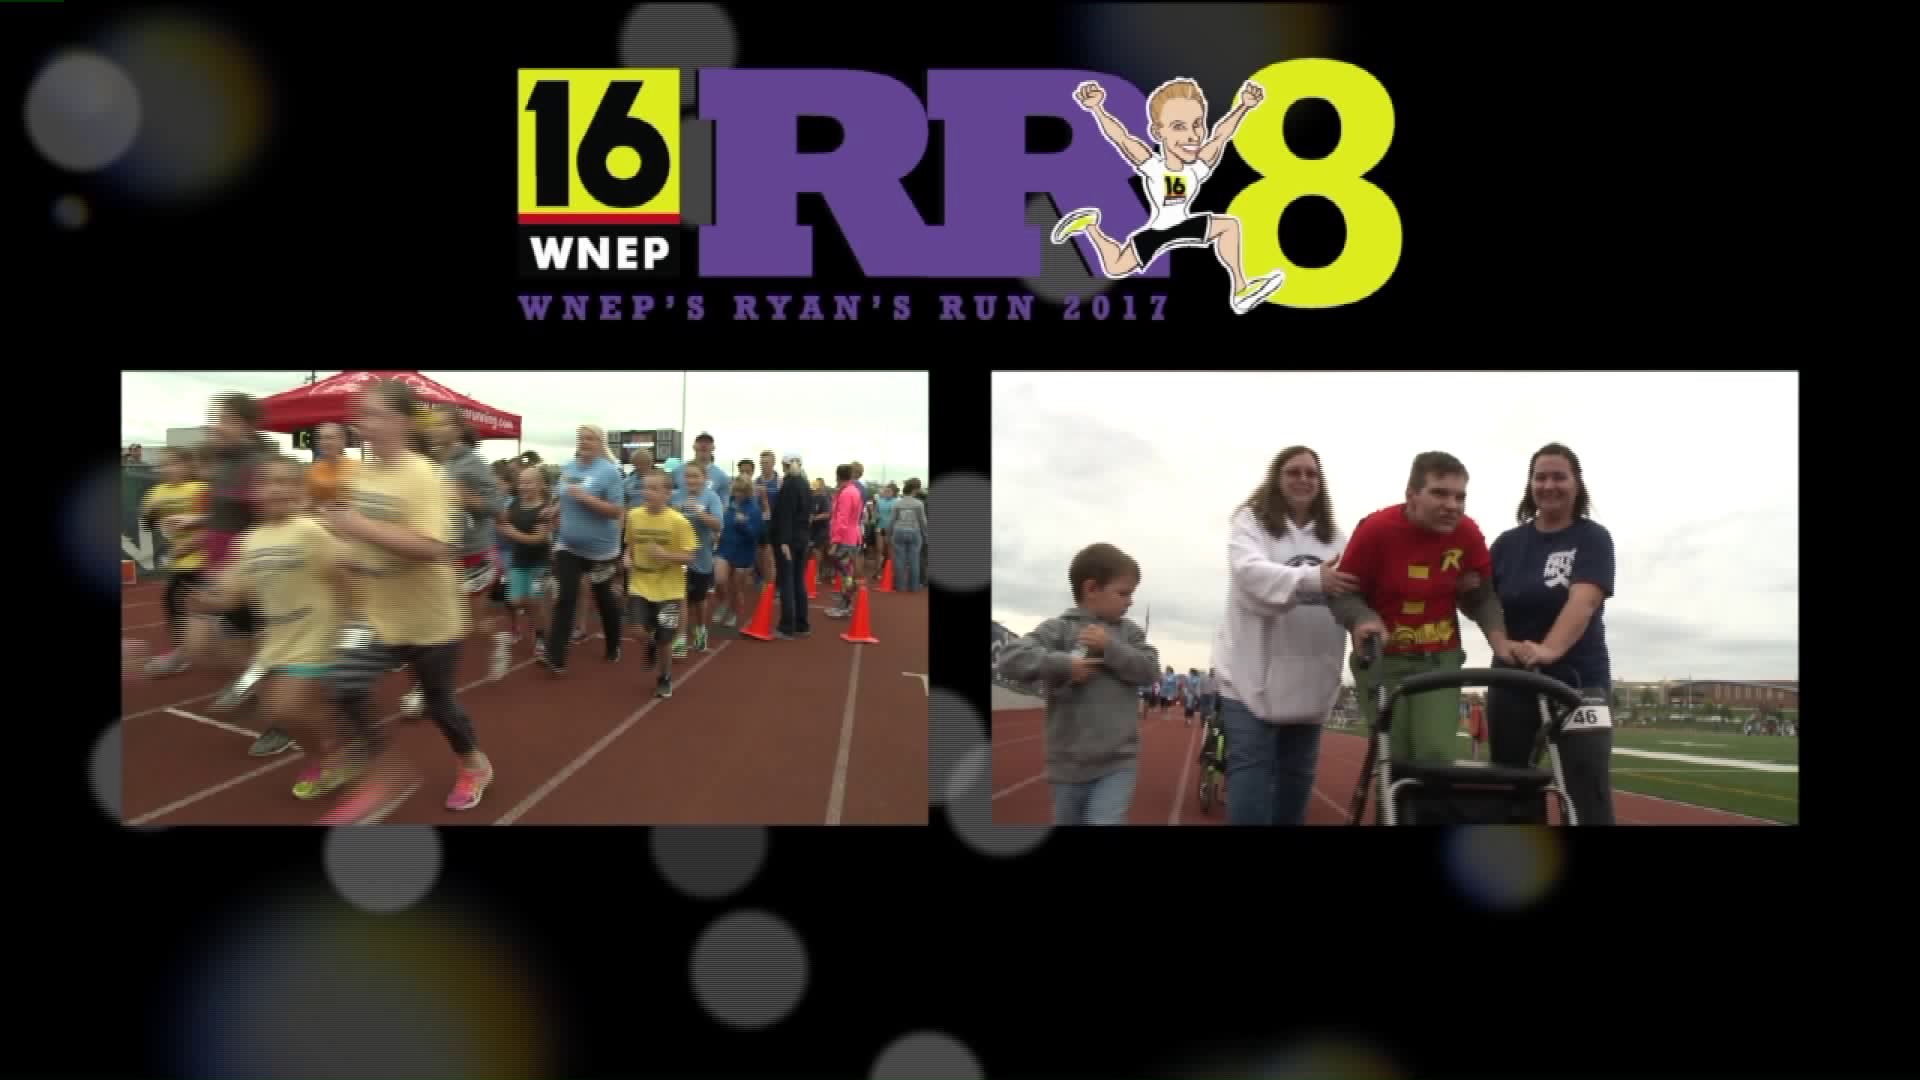 WNEP's Ryan's Run 8: Our Inspiration to Run